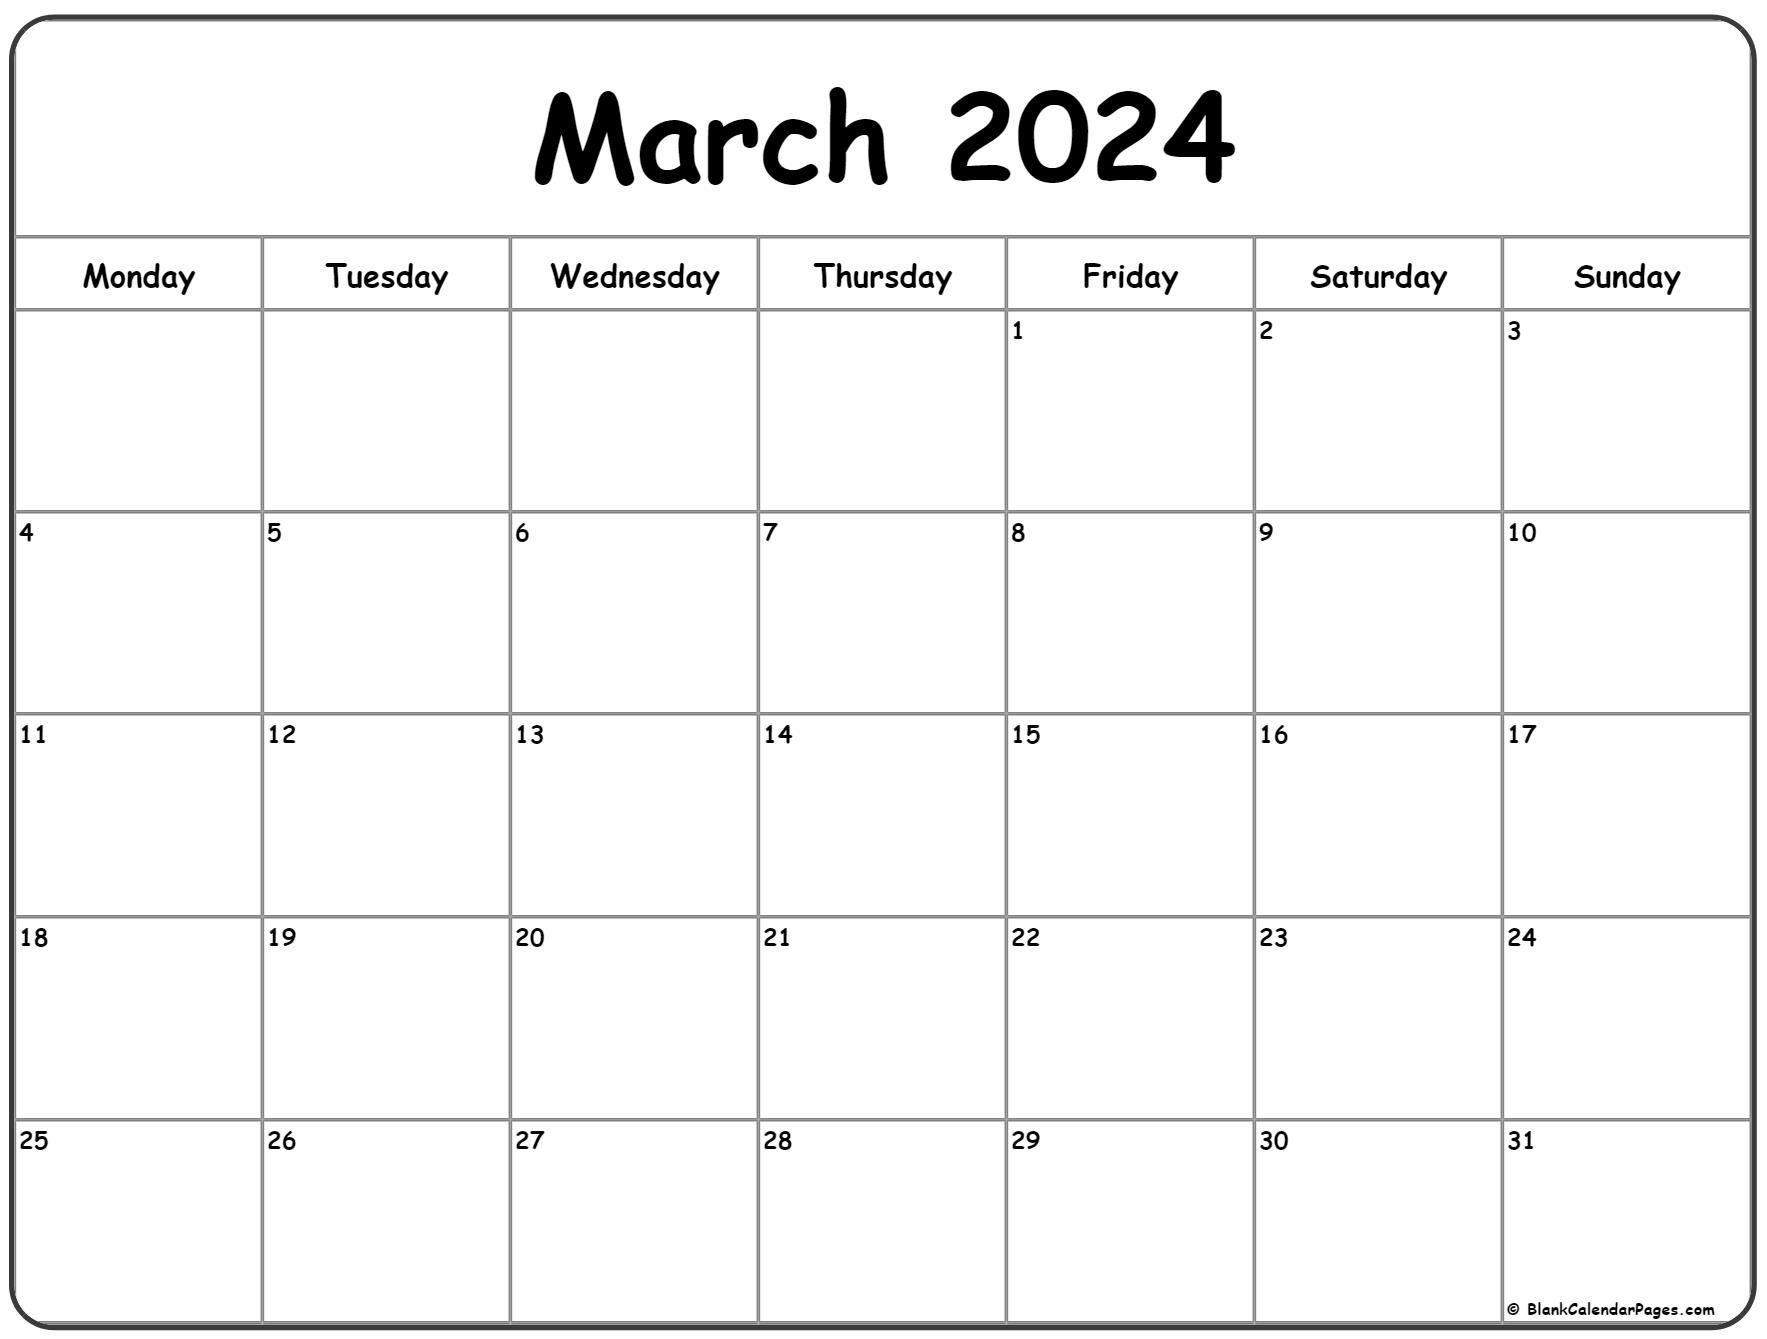 March 2024 Monday Calendar | Monday To Sunday for 2024 Printable Calendar March